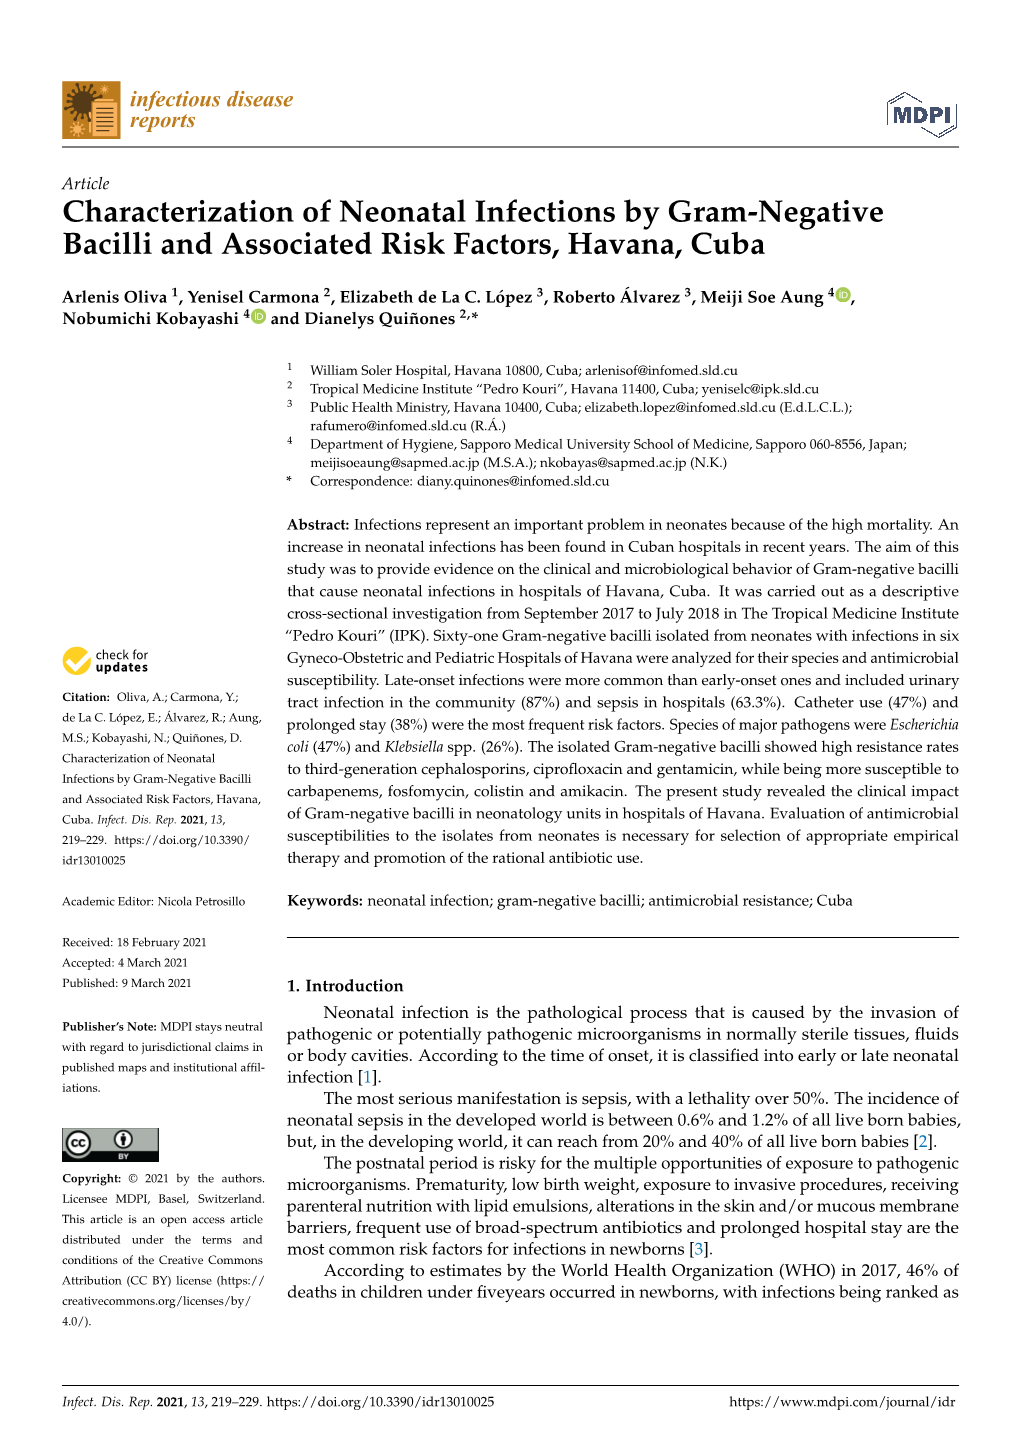 Characterization of Neonatal Infections by Gram-Negative Bacilli and Associated Risk Factors, Havana, Cuba